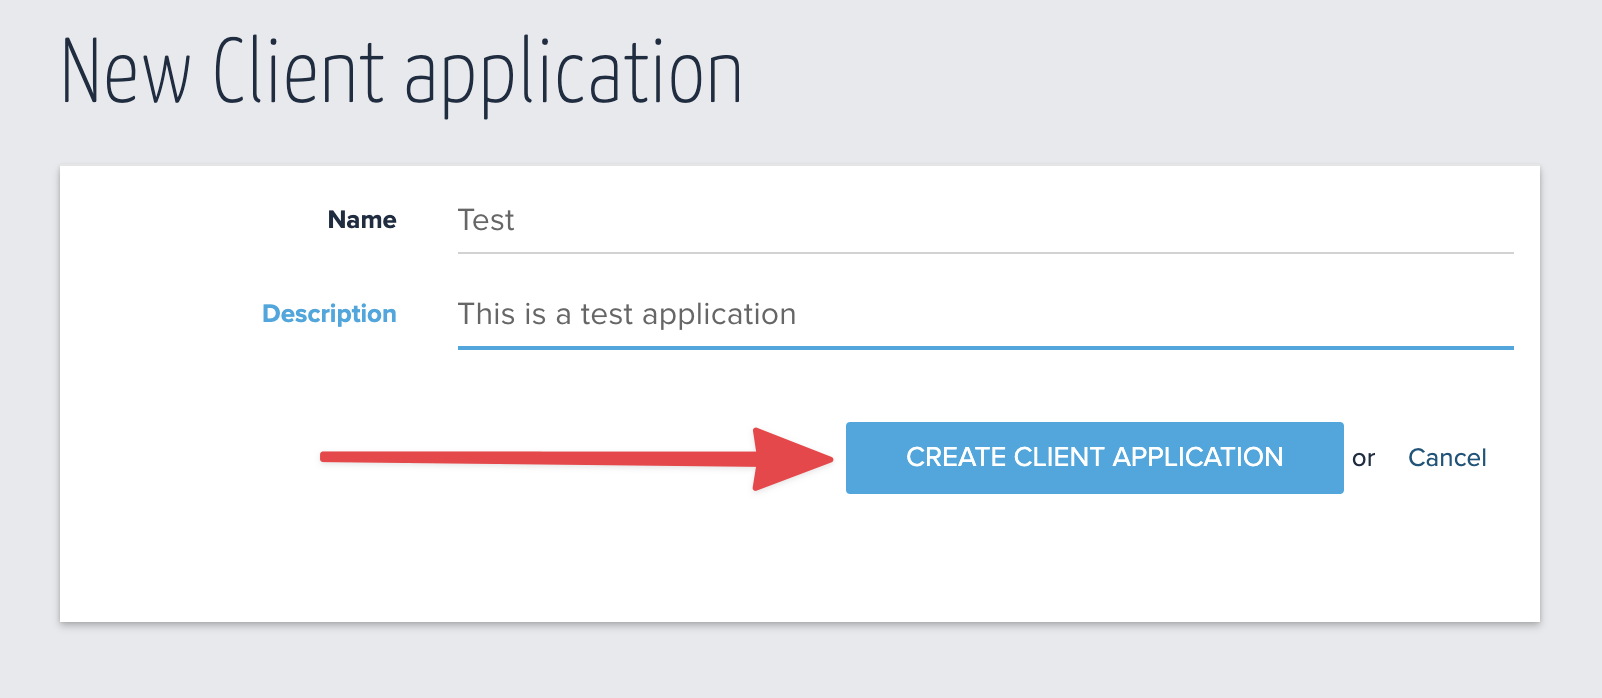 Client application create